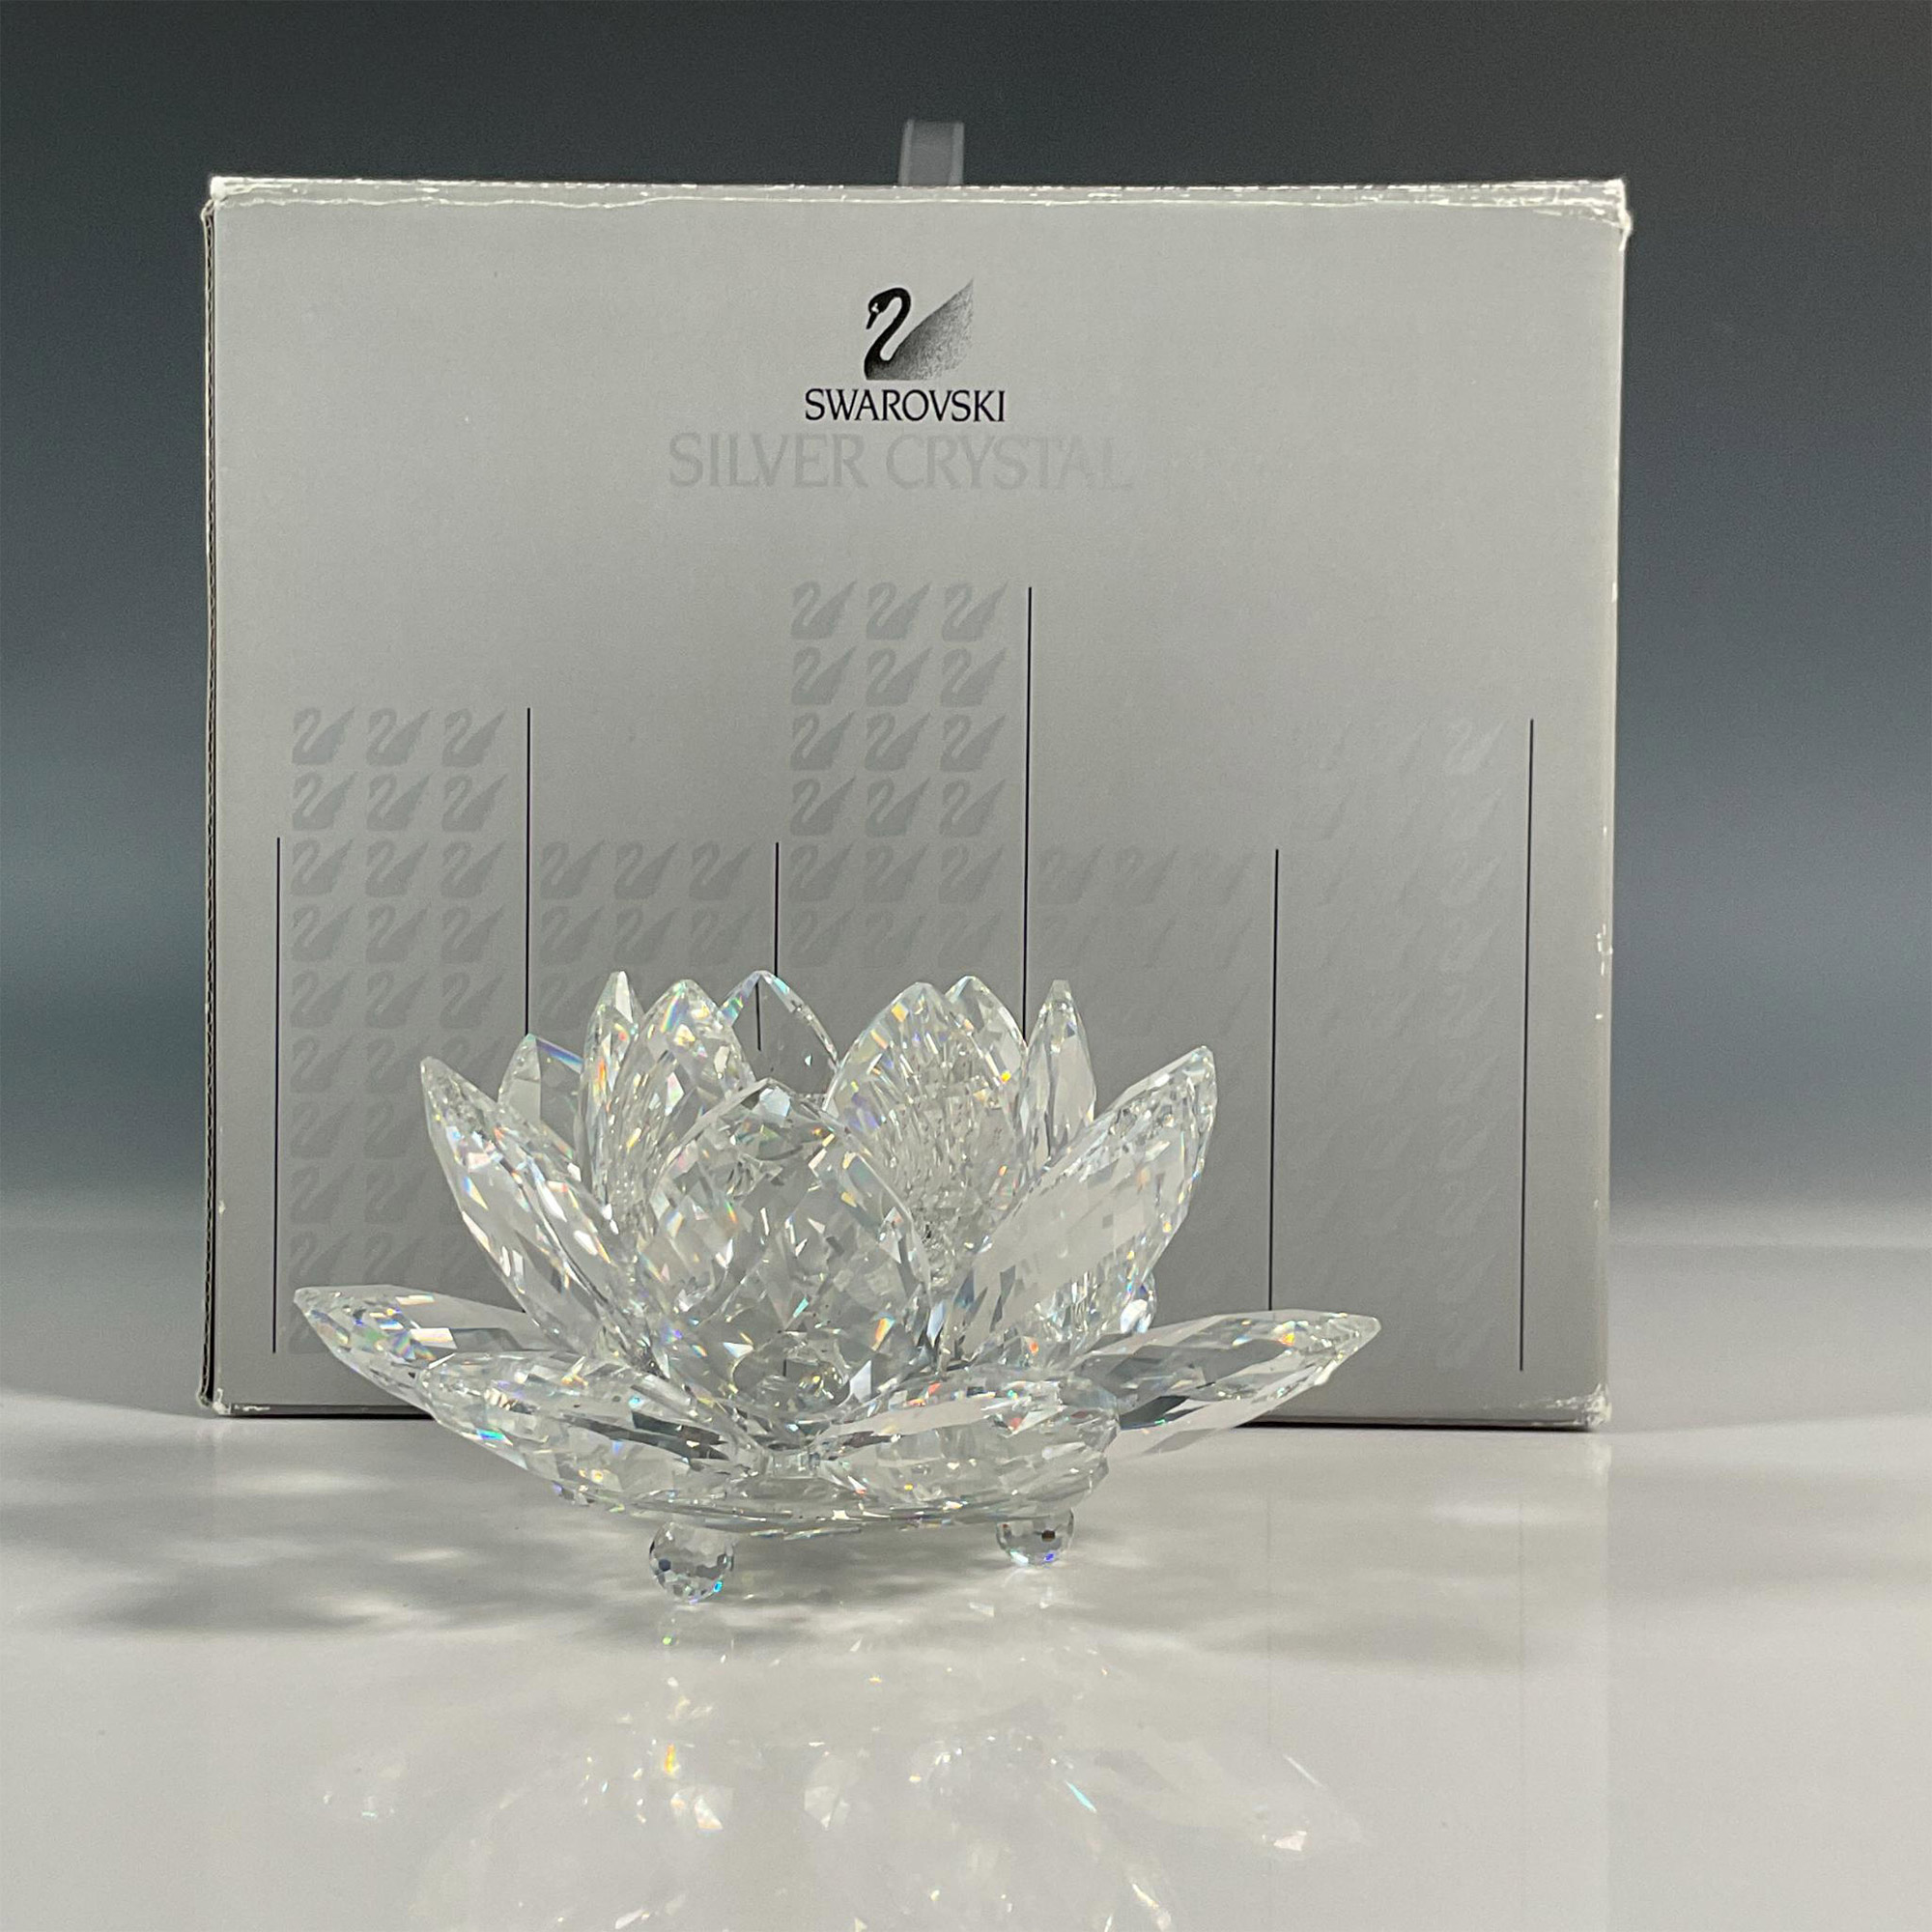 Swarovski Silver Crystal Candle Holder, Waterlily - Image 2 of 5